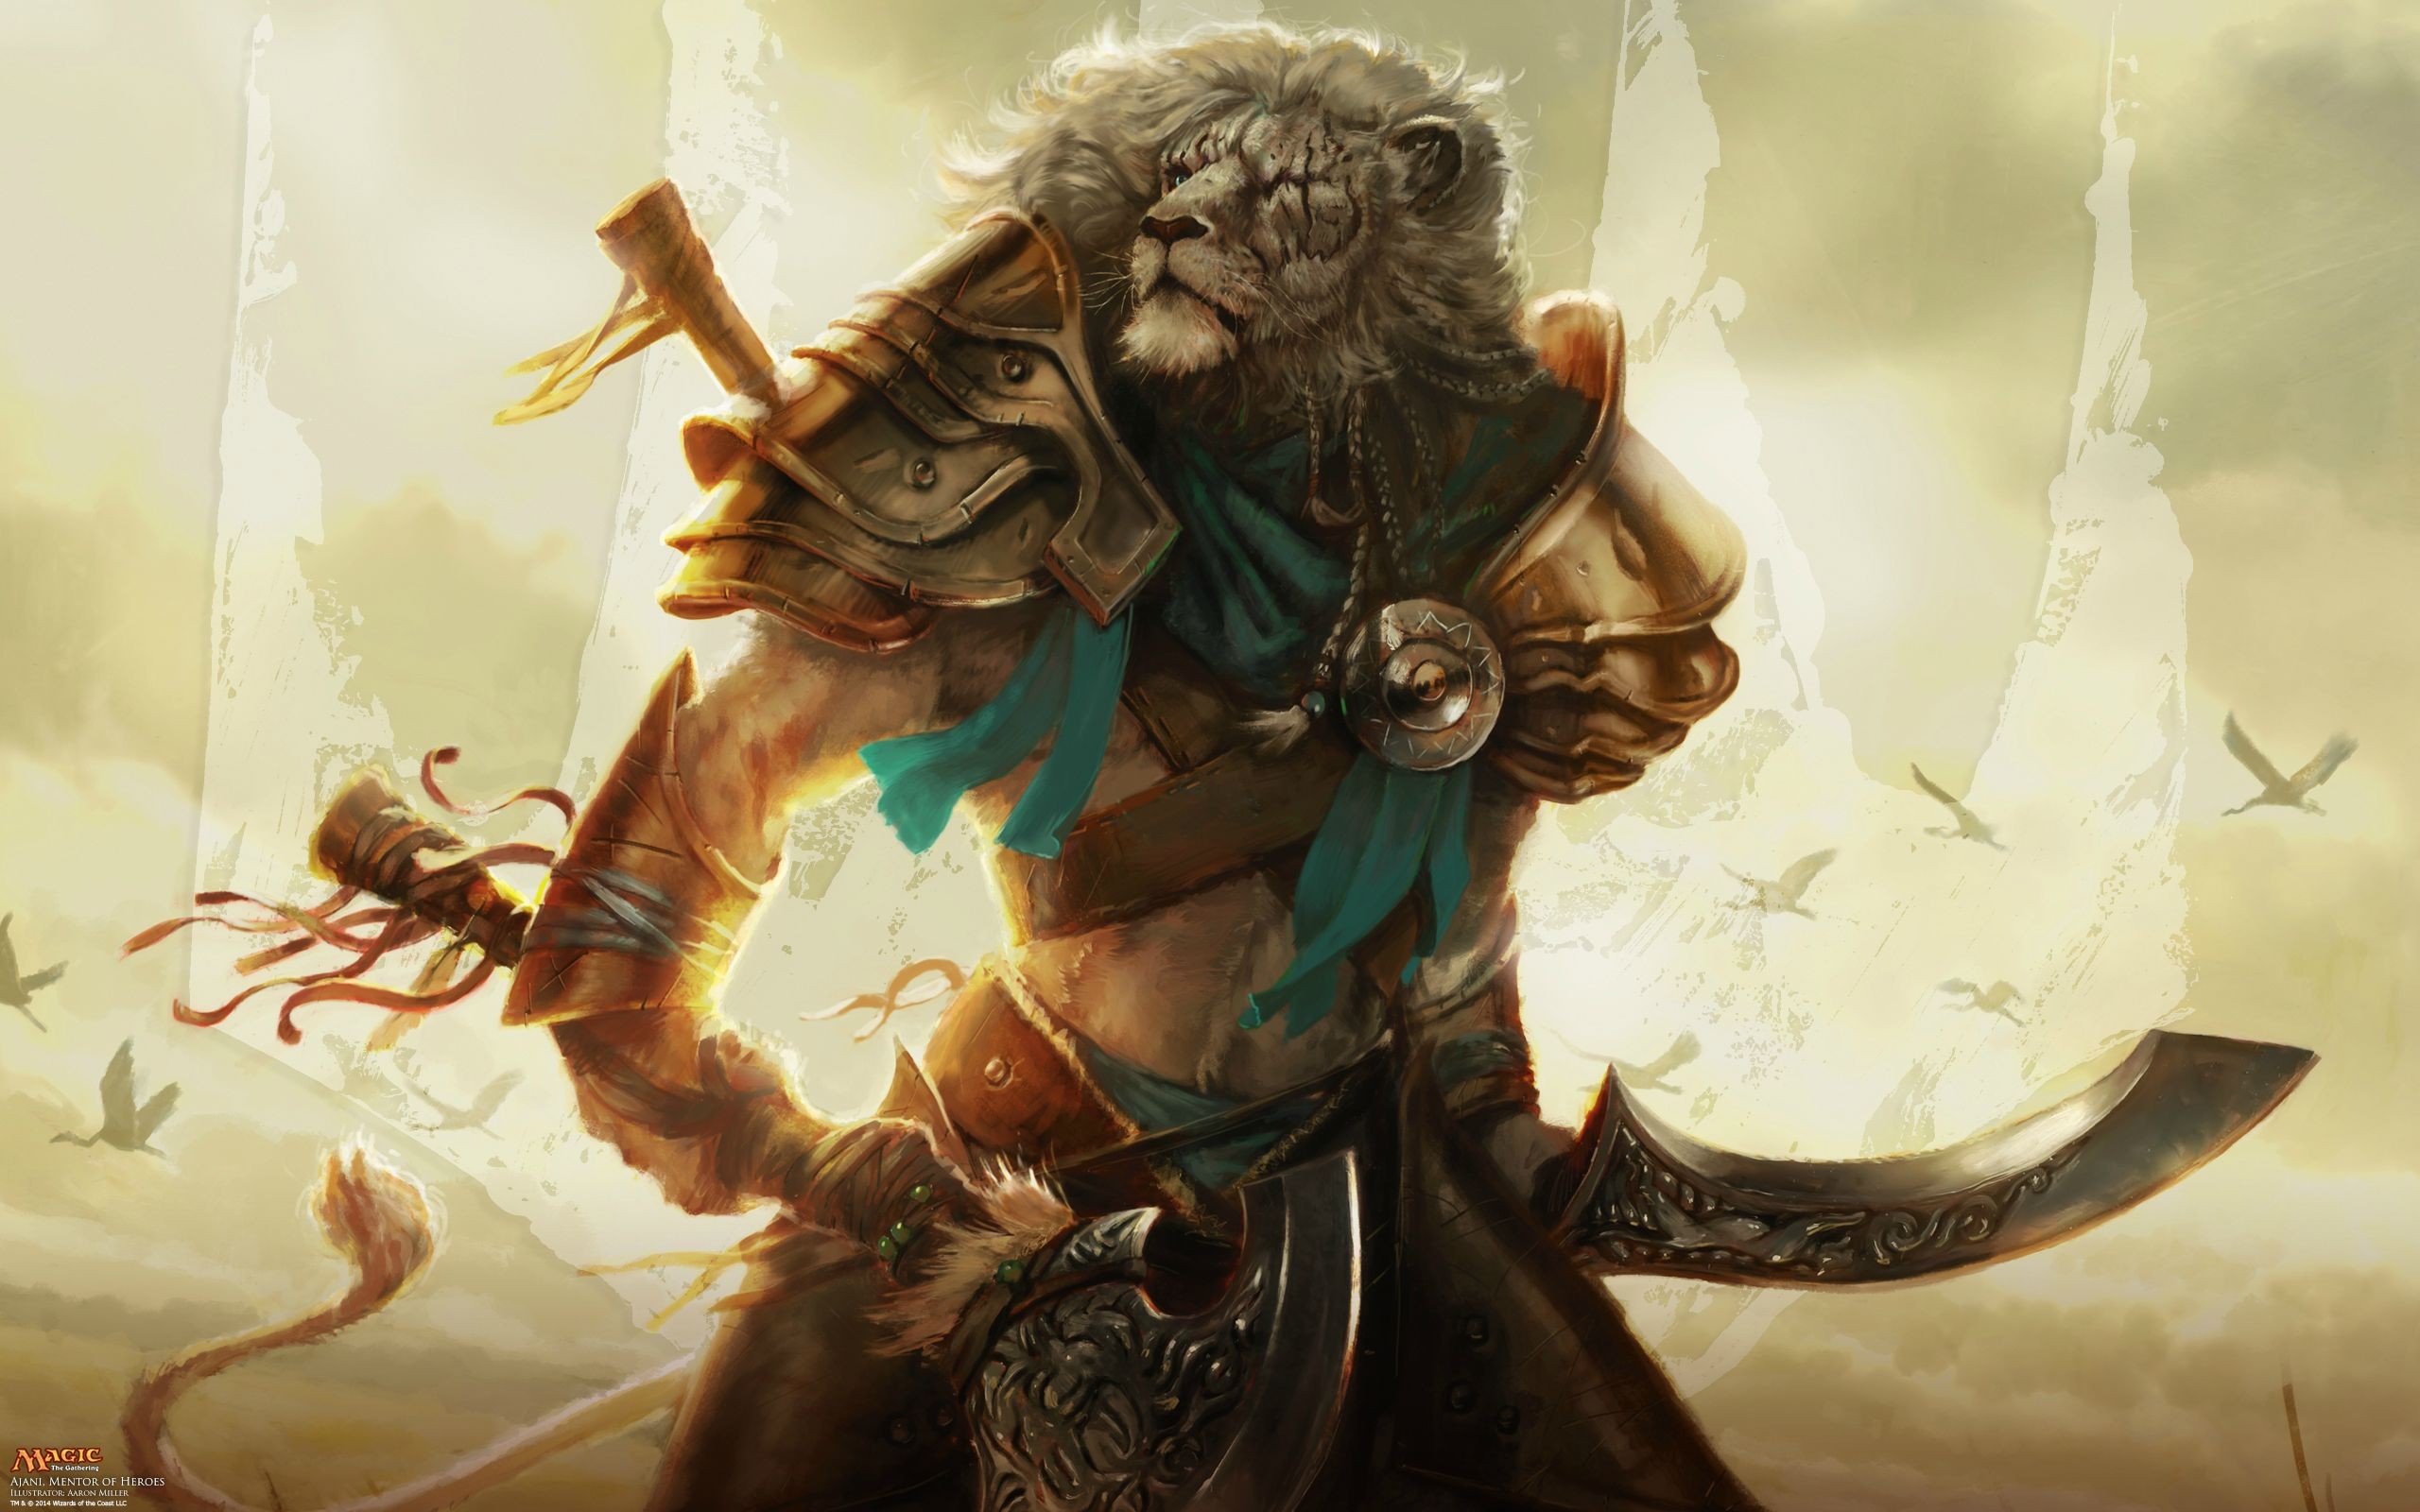 General 2560x1600 Magic: The Gathering fantasy art hero feline warrior Ajani Goldmane Trading Card Games digital art watermarked